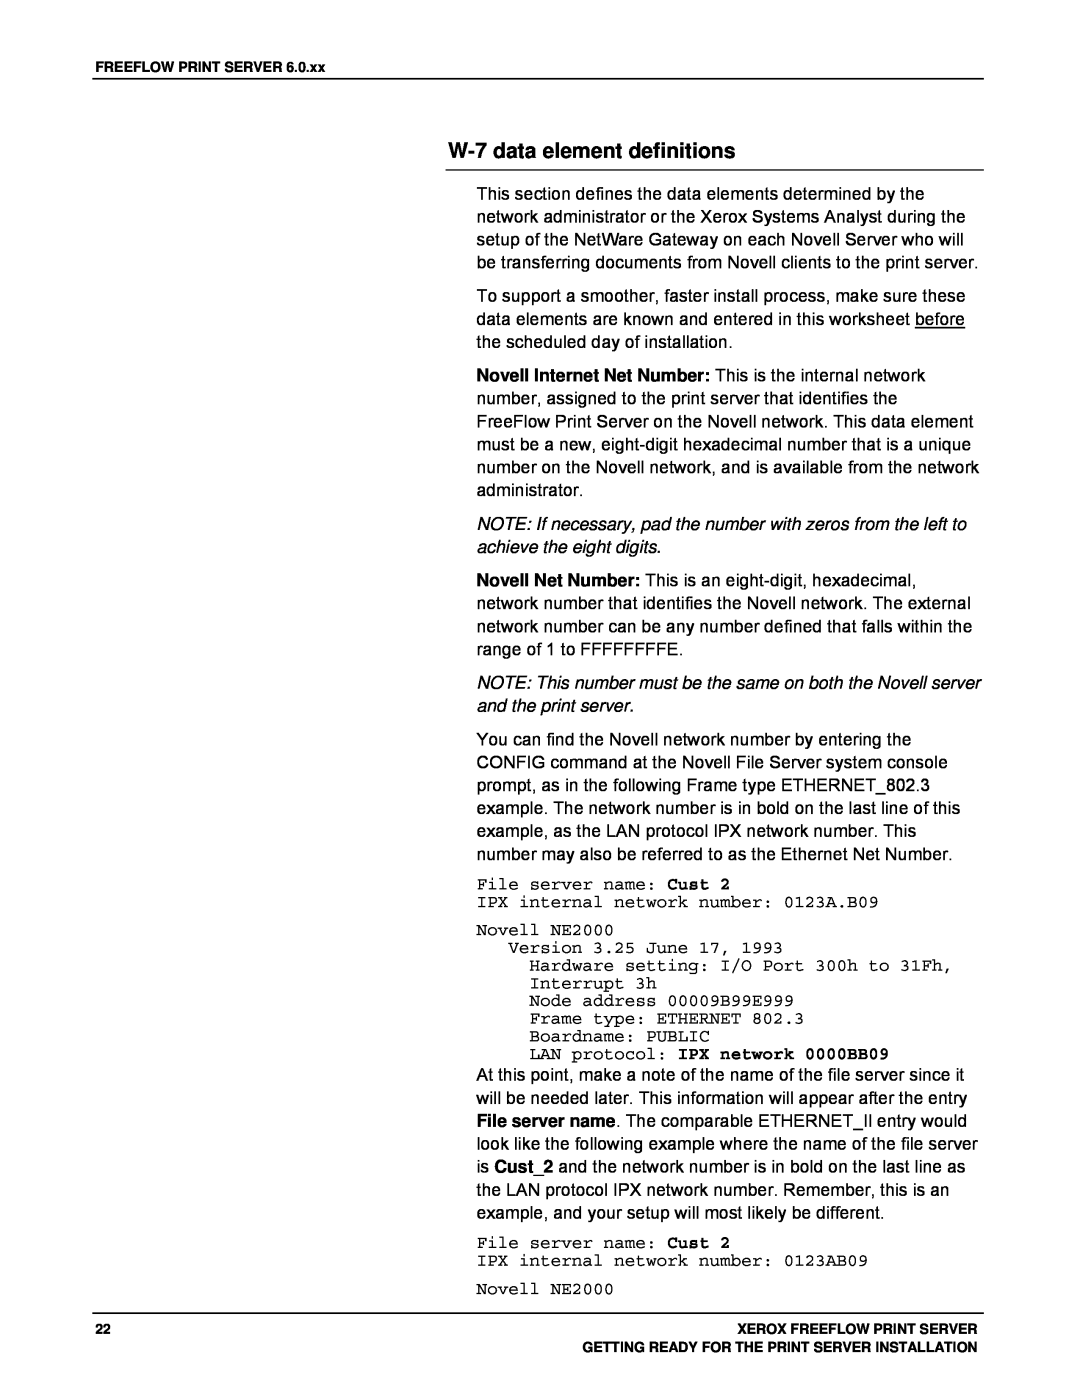 Xerox 701P46985 manual W-7data element definitions, LAN protocol IPX network 0000BB09 